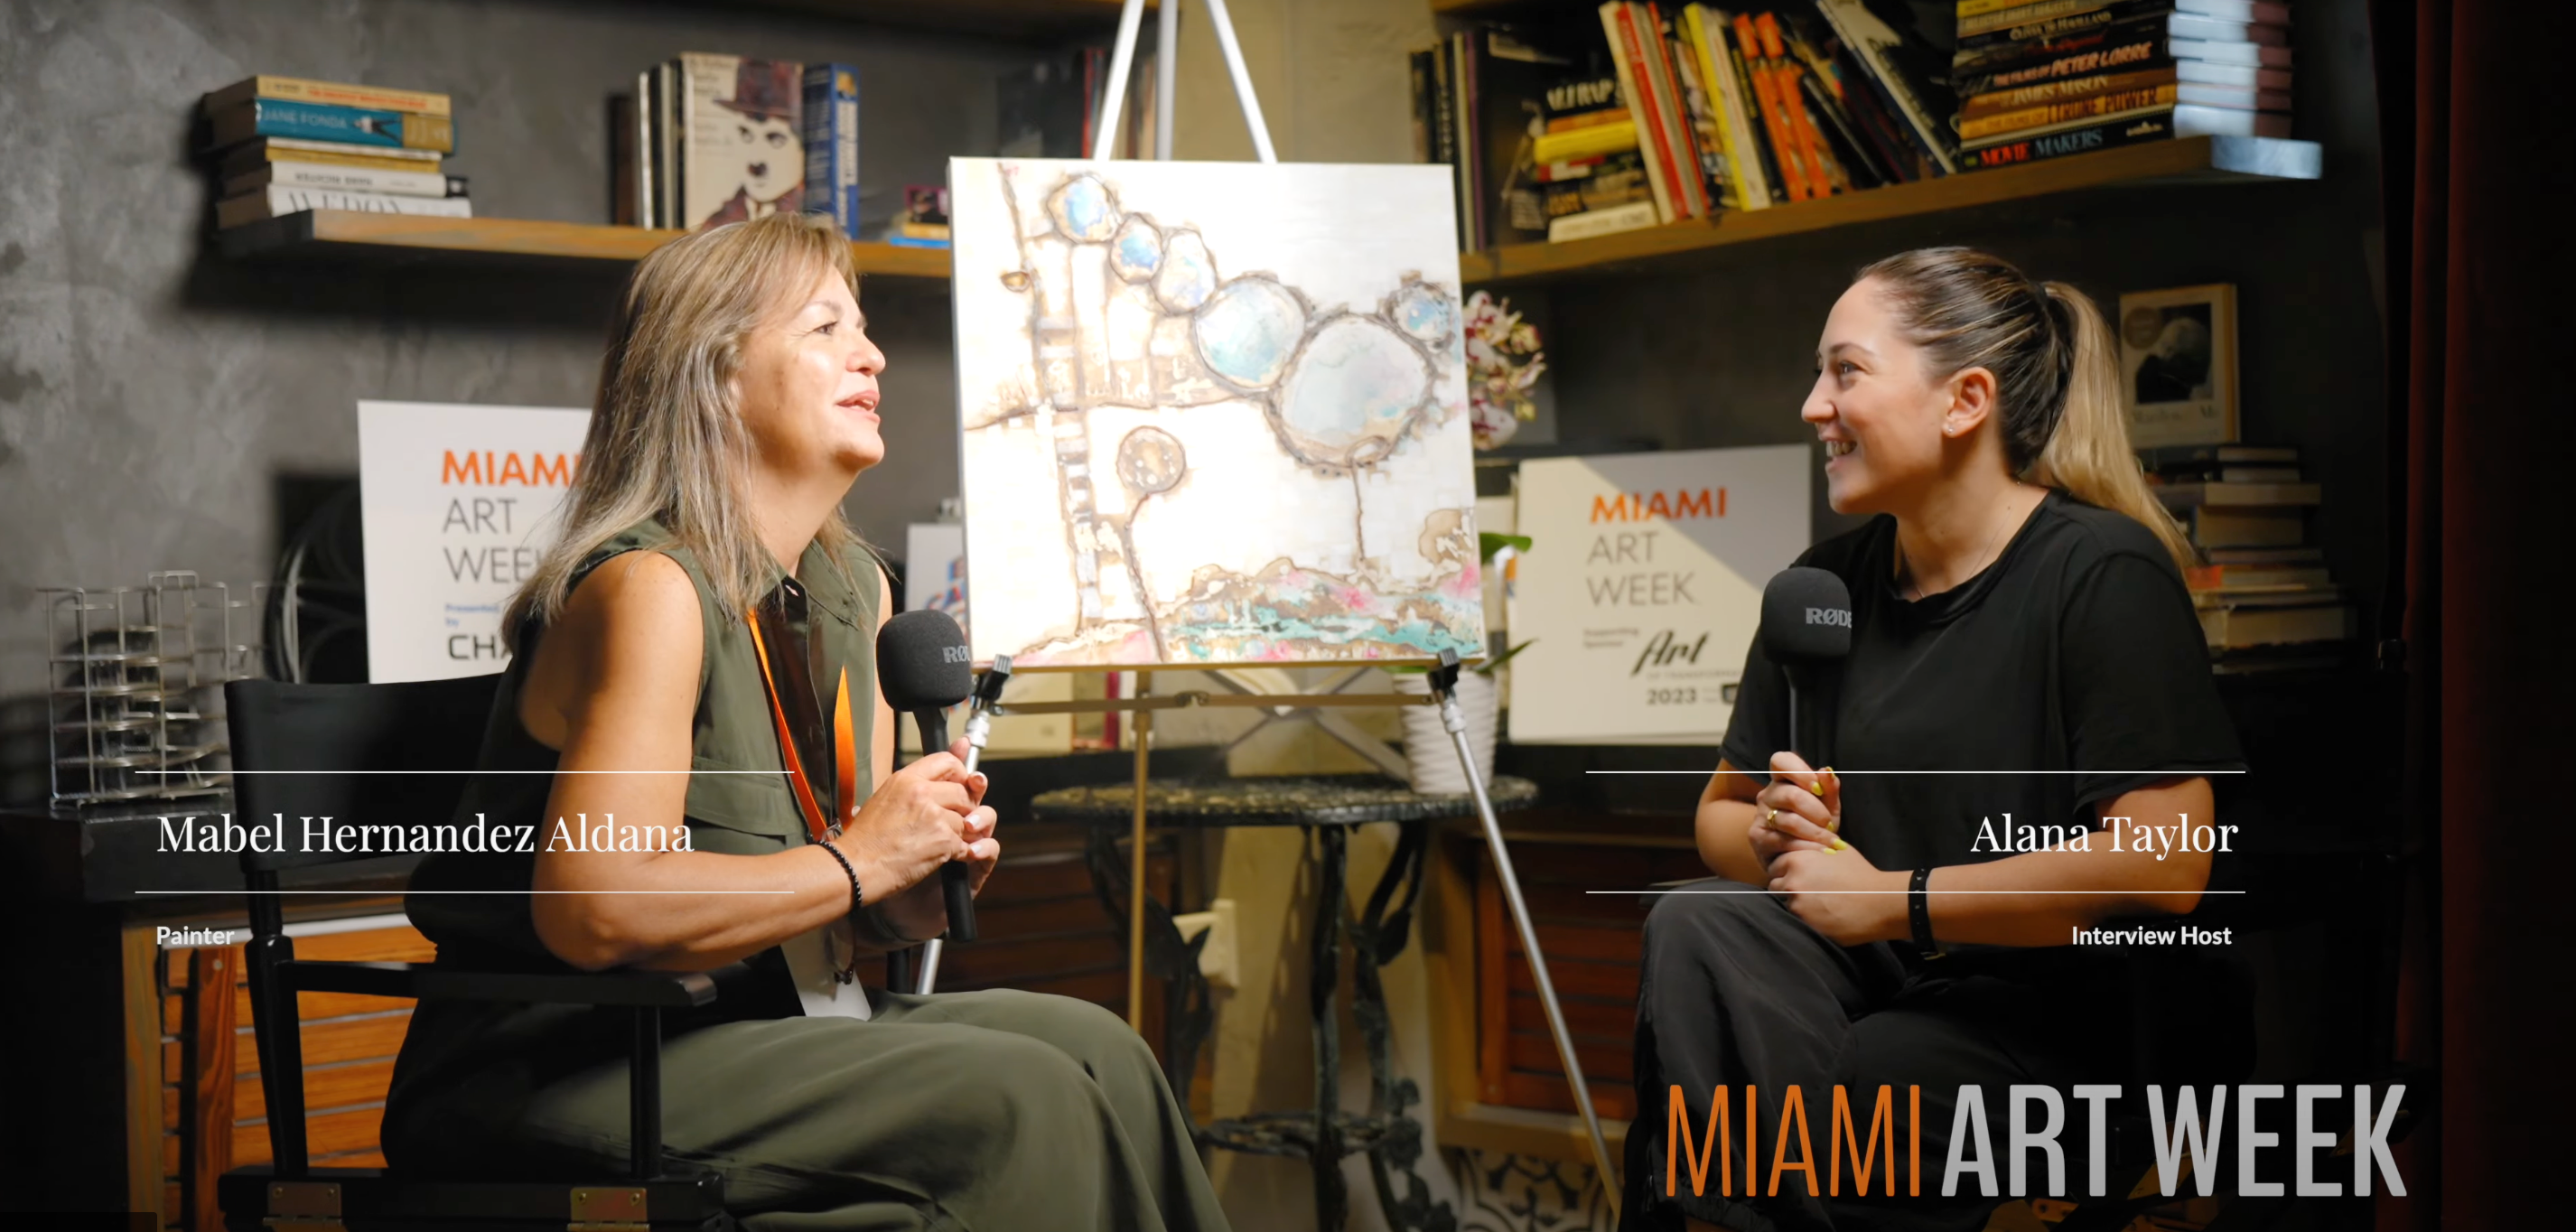 Load video: Mabel Hernandez Aldana - Miami art Week Interview